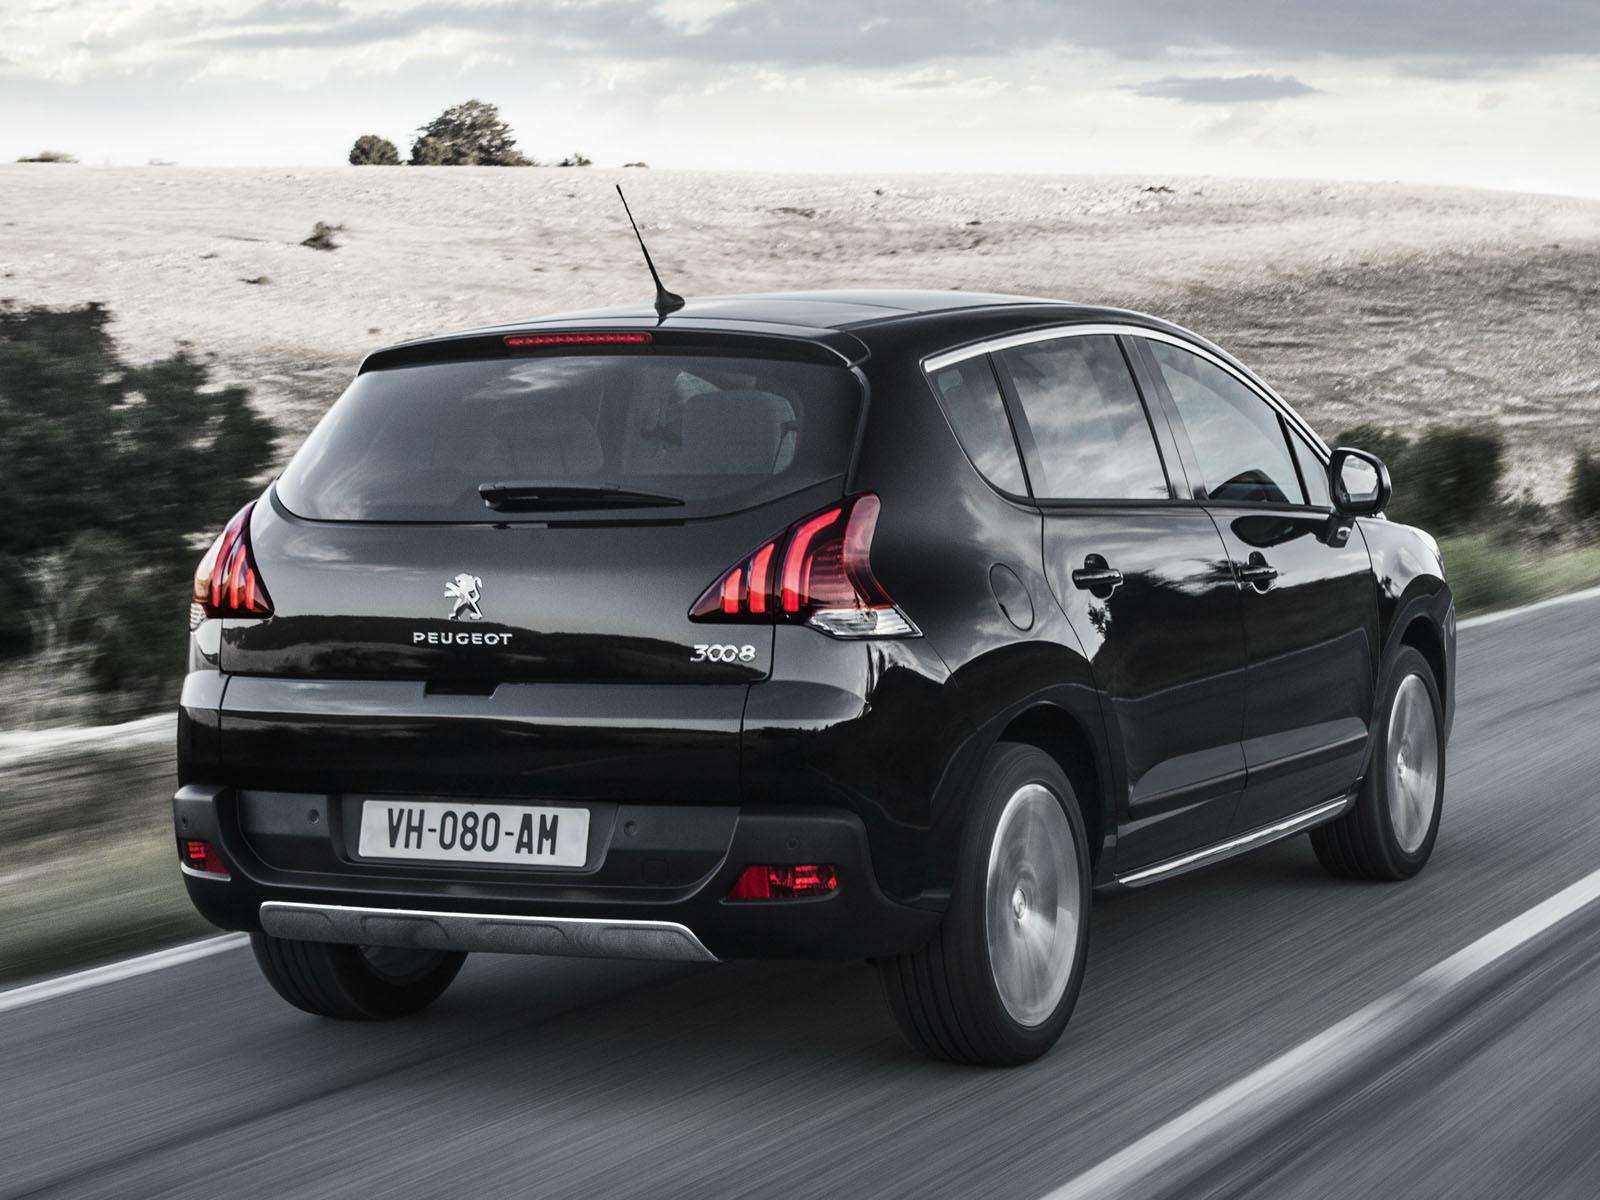 Peugeot Cars News 2014 3008 & 3008 Hybrid4